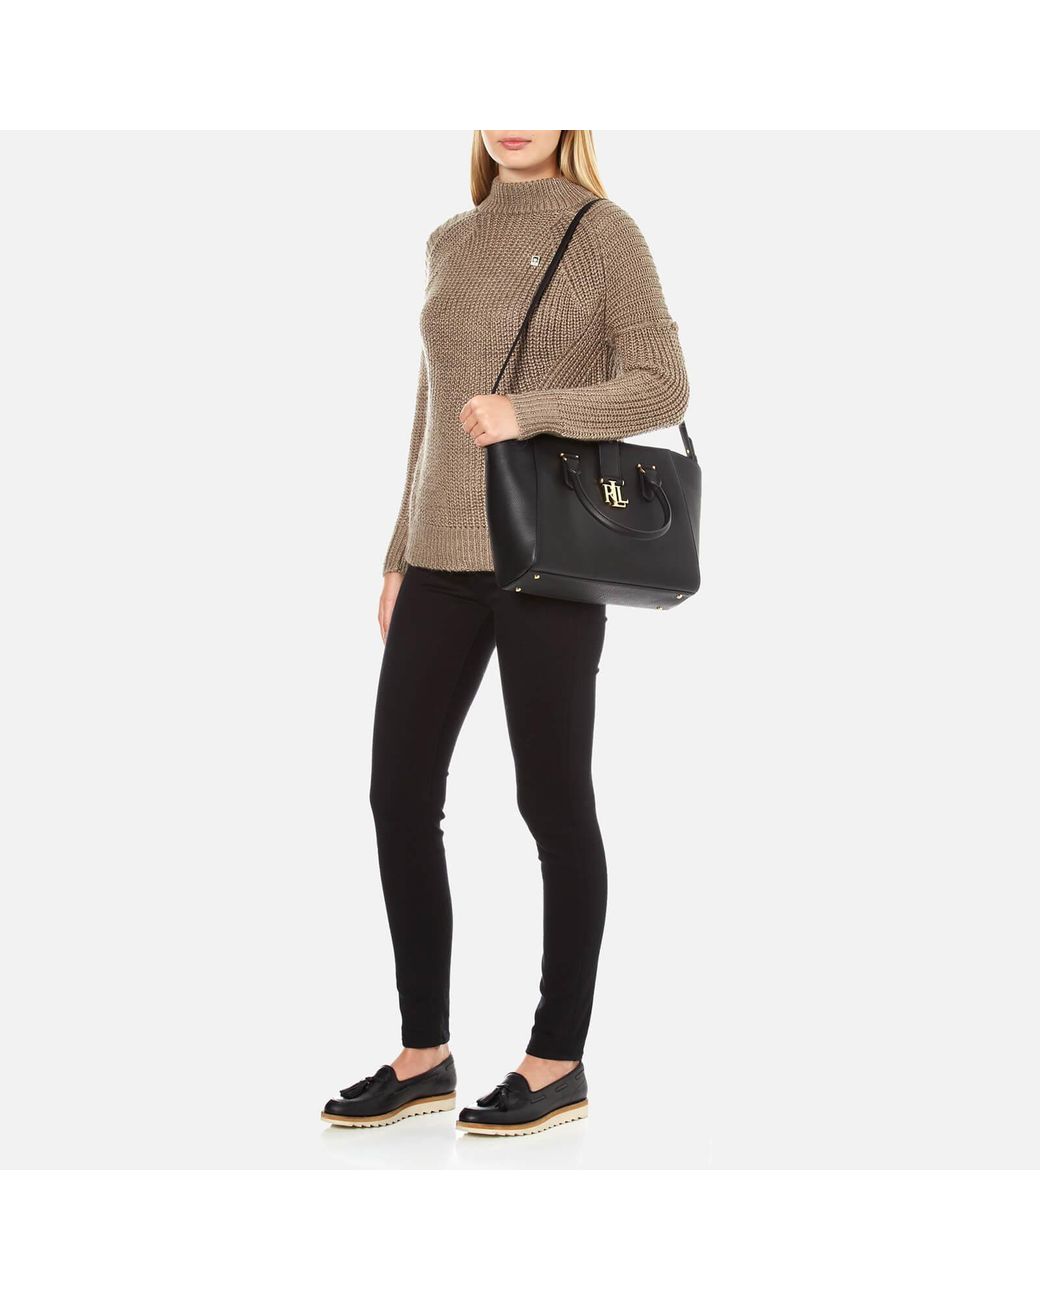 Lauren by Ralph Lauren Carrington Bethany Shopper Bag in Black | Lyst